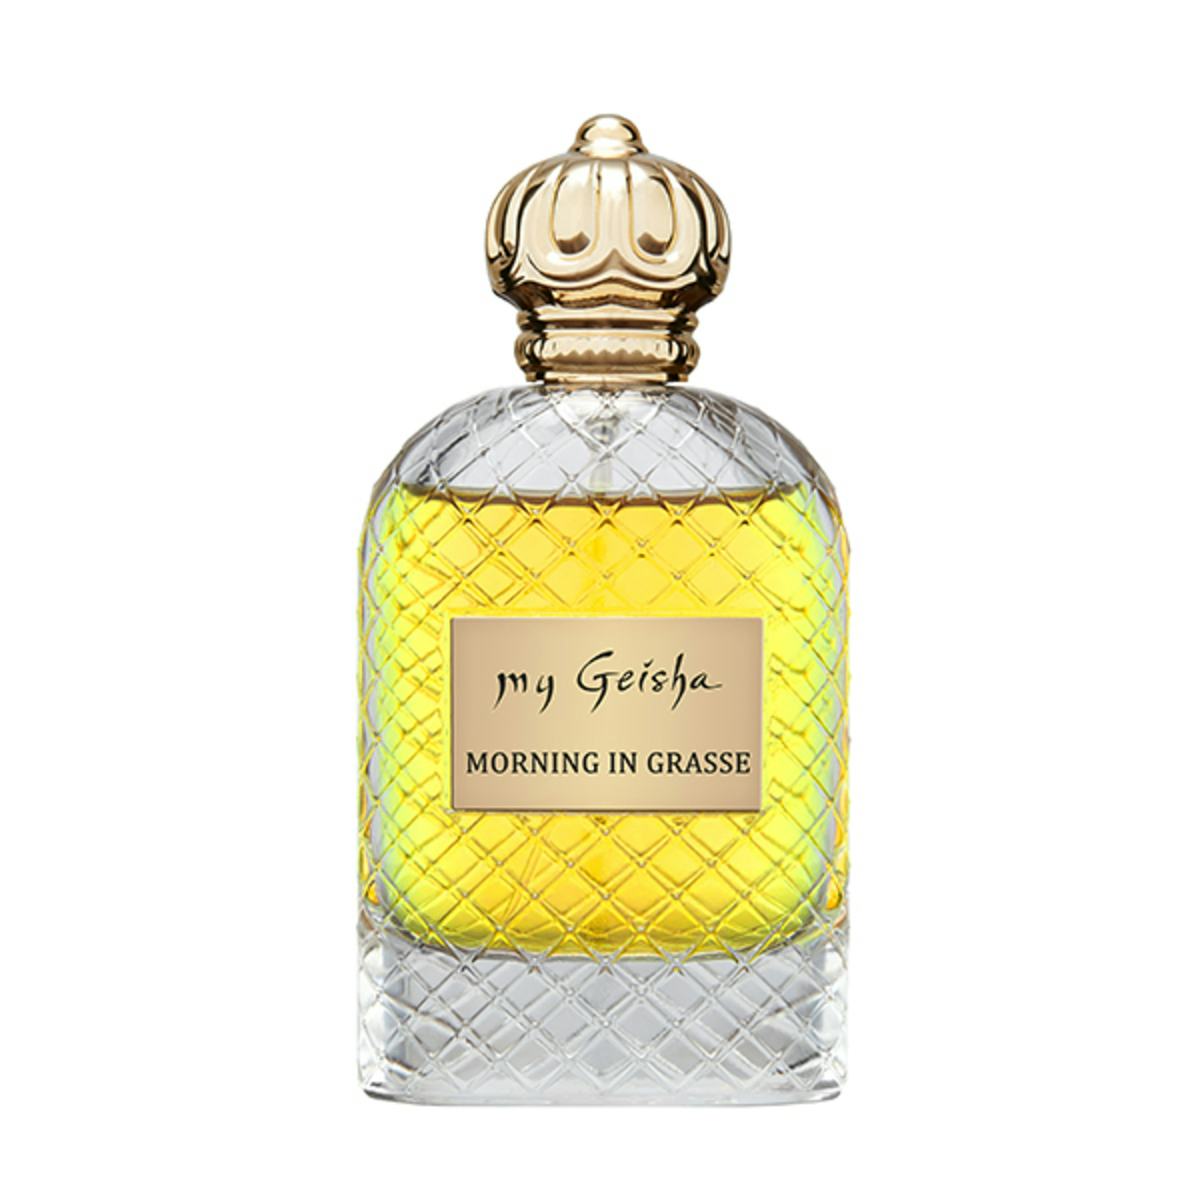 Perfume extract "Morning in Grasse" 100 ml, My Geisha Genève, Genève, image 1 | Mimelis